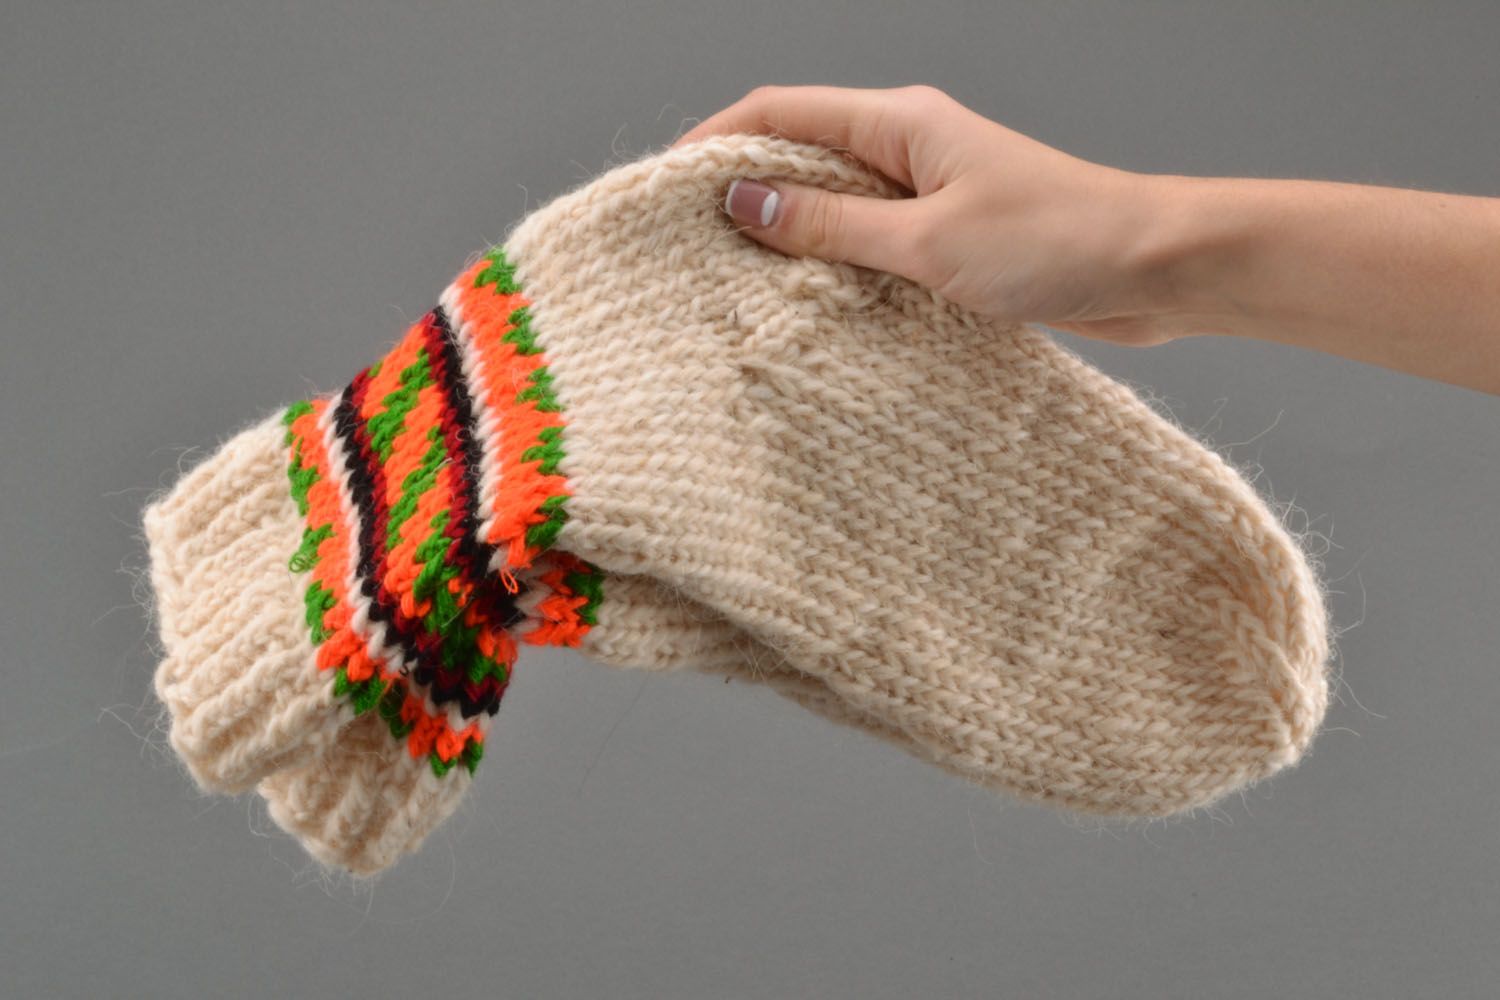 Homemade knitted woolen socks photo 2